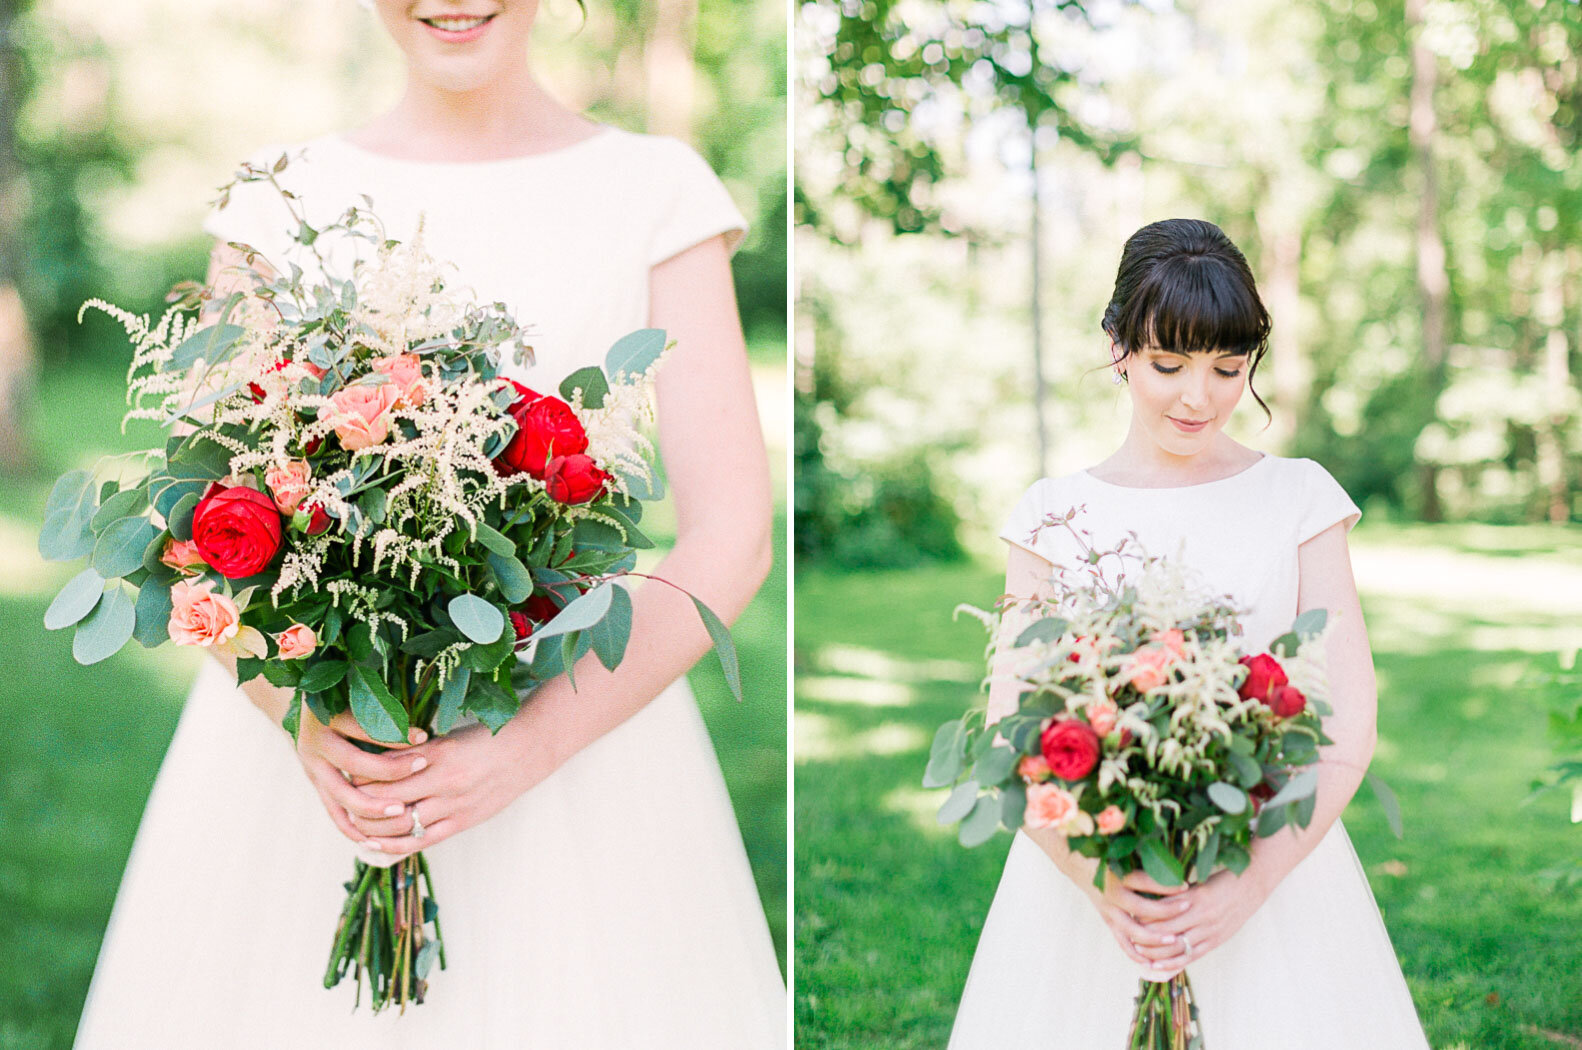 charlottesville-virginia-luray-wedding-photographer-romatic-film-fuji400h-35mm-film-bride-and-flowers.jpg